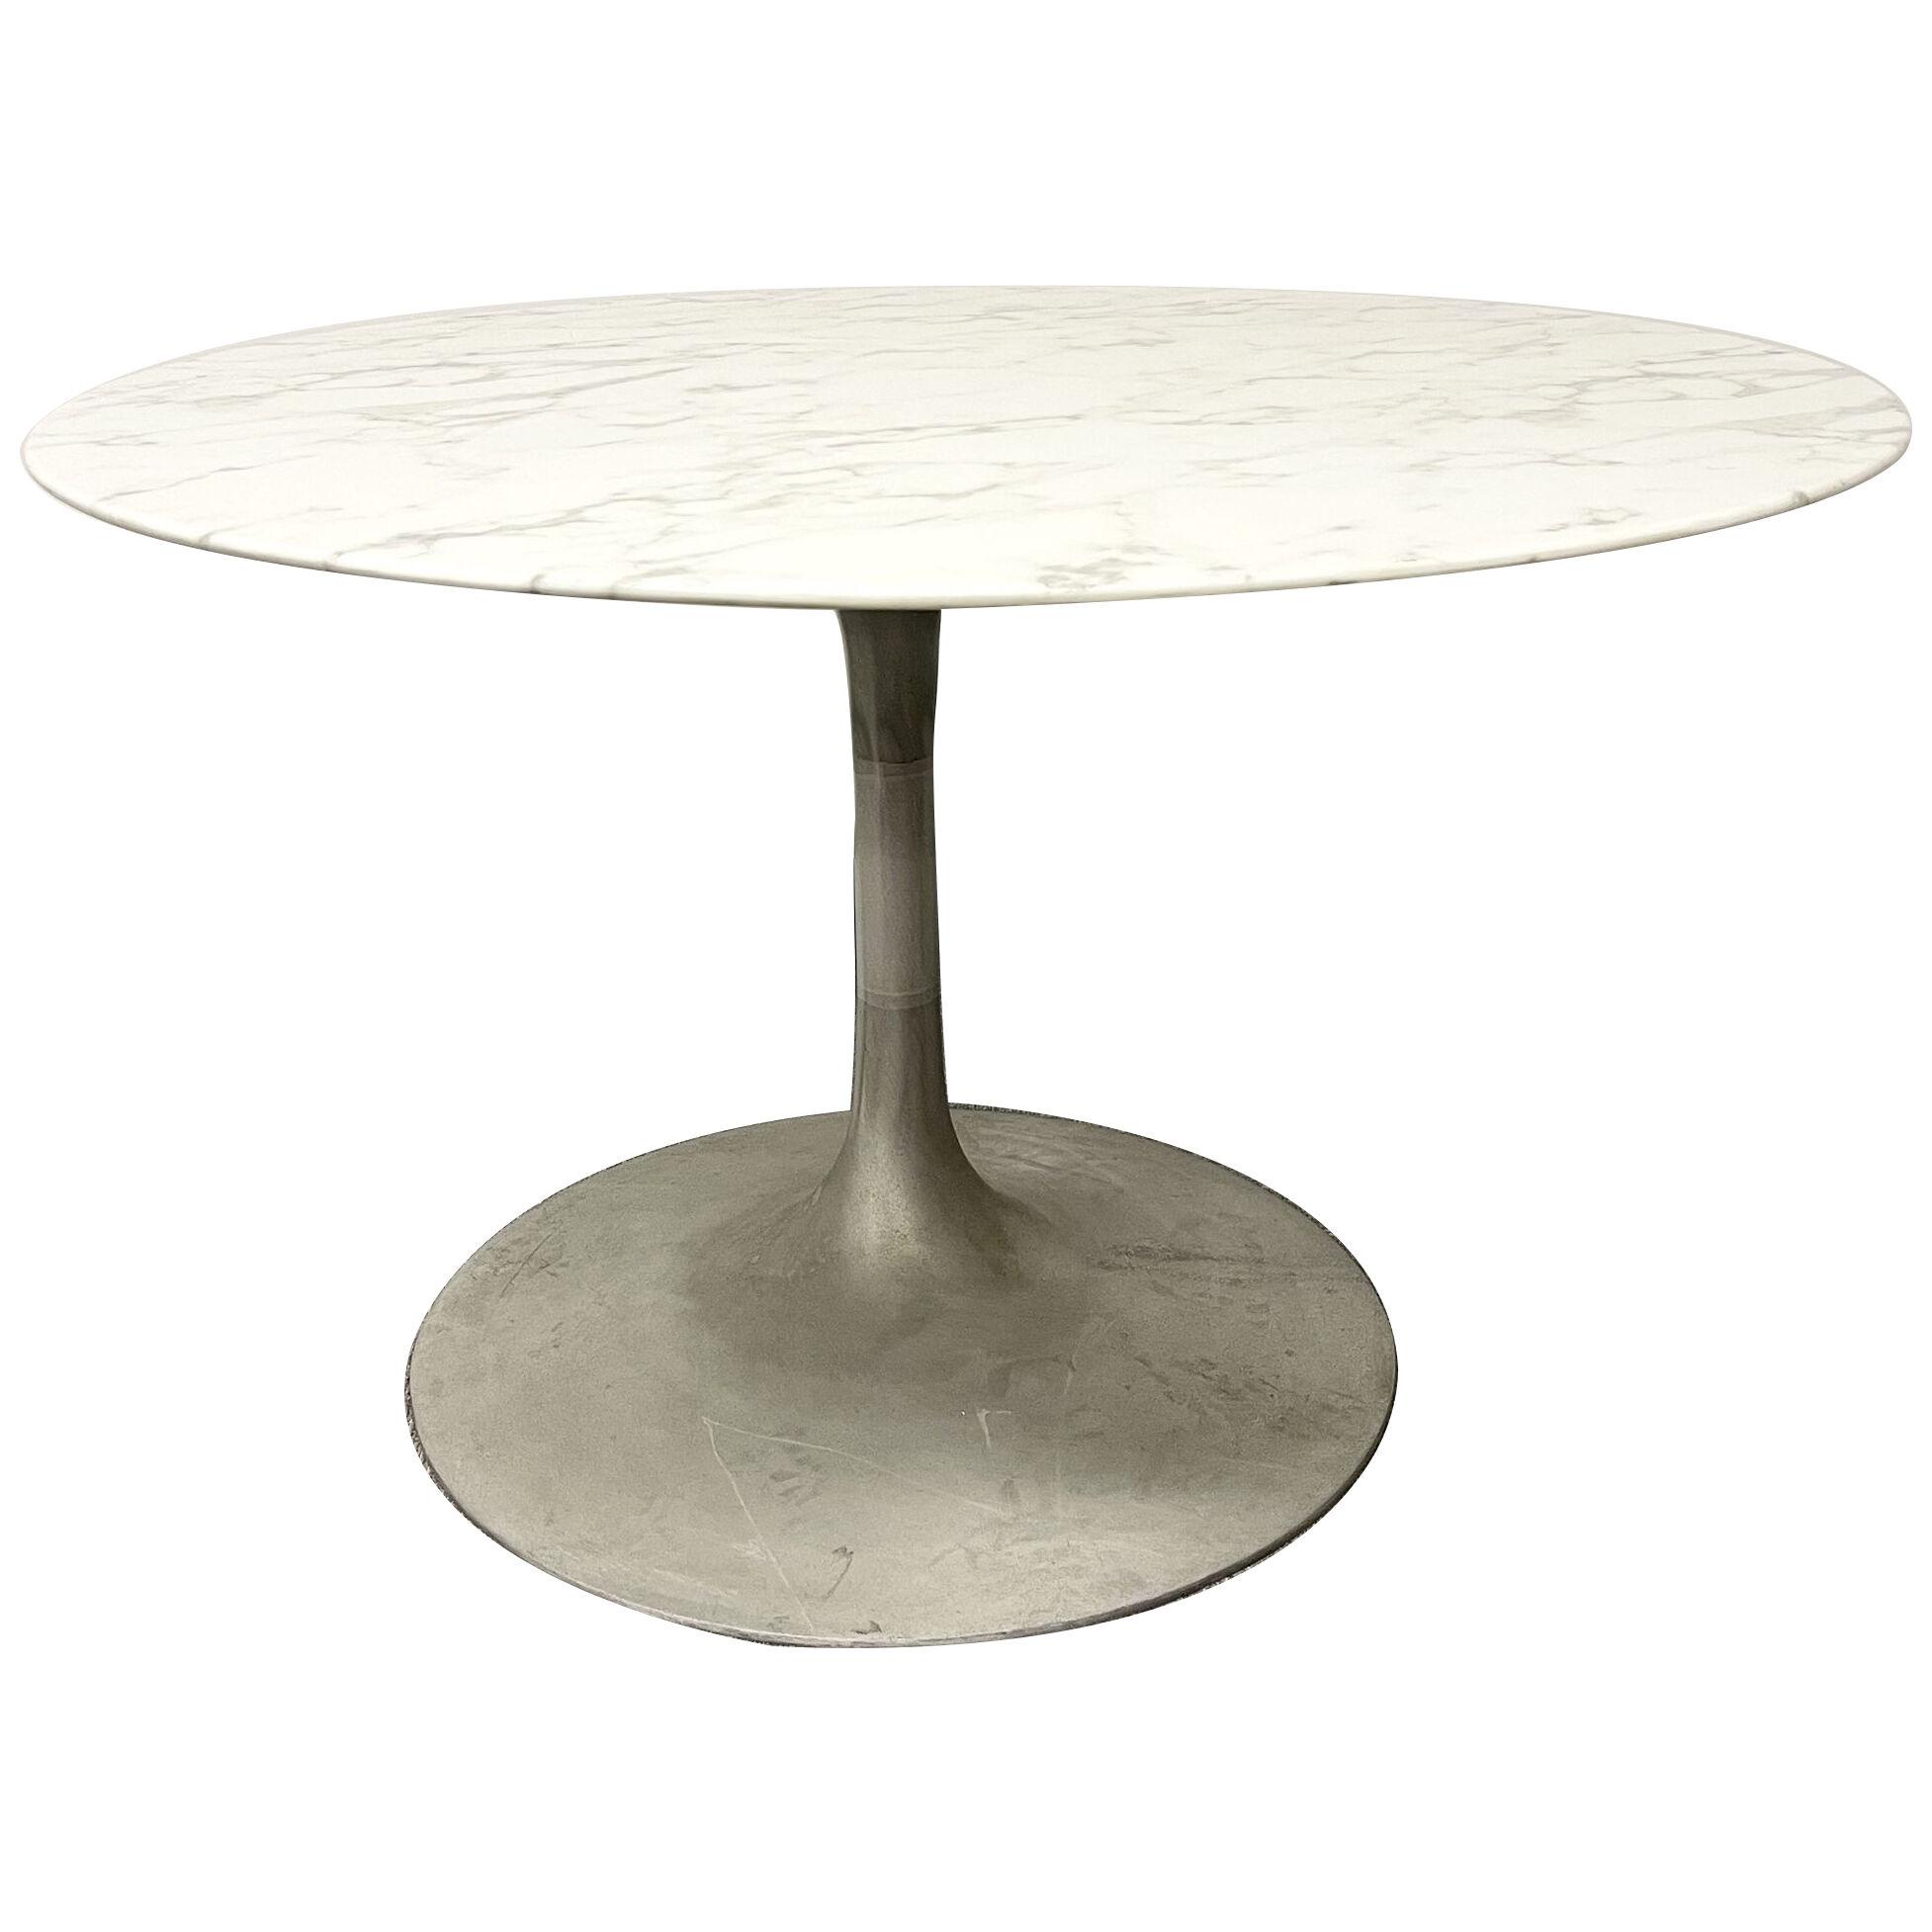 Eero Saarinen Table, Carrara Marble Top, Mid Century Modern